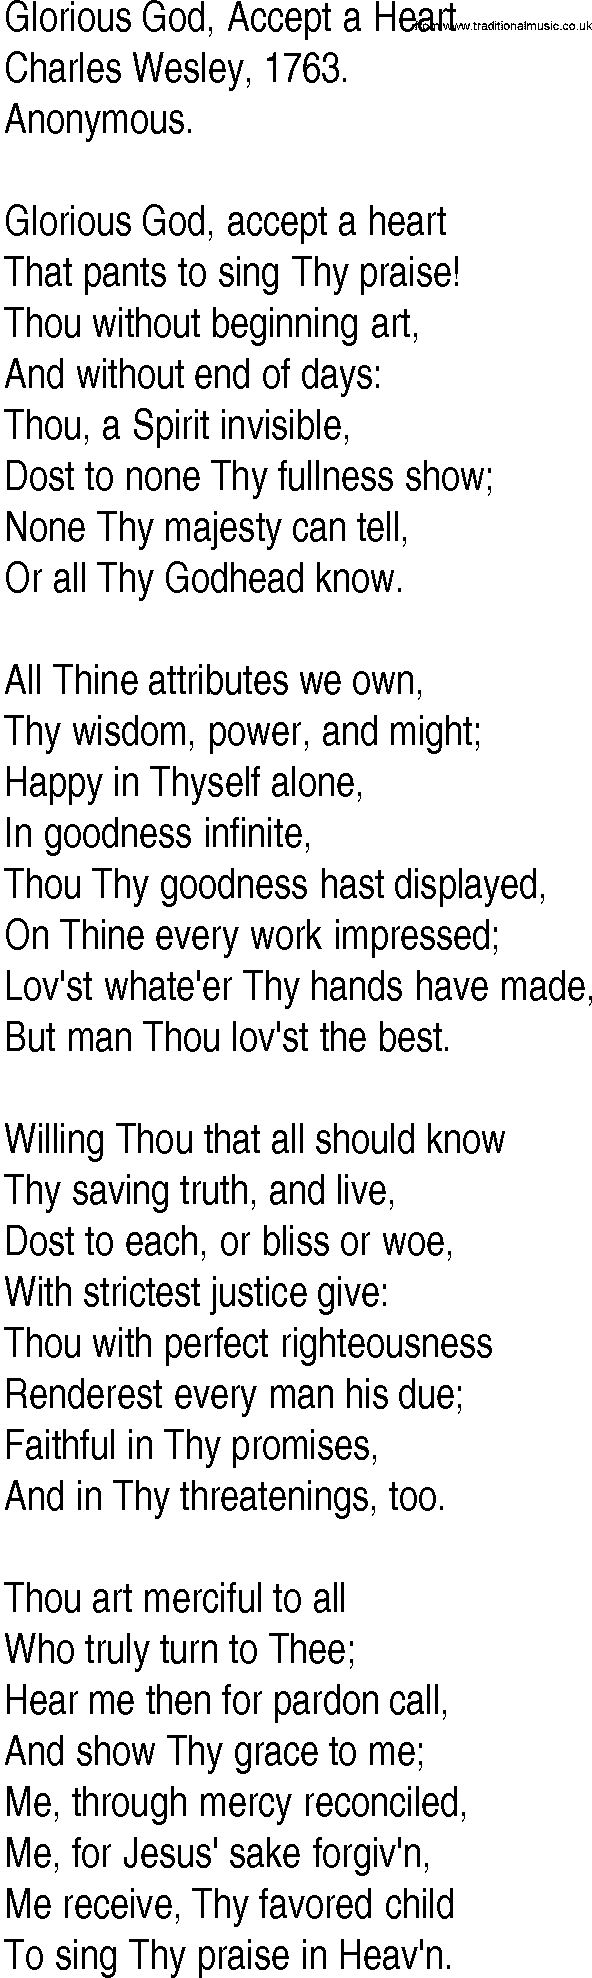 Hymn and Gospel Song: Glorious God, Accept a Heart by Charles Wesley lyrics